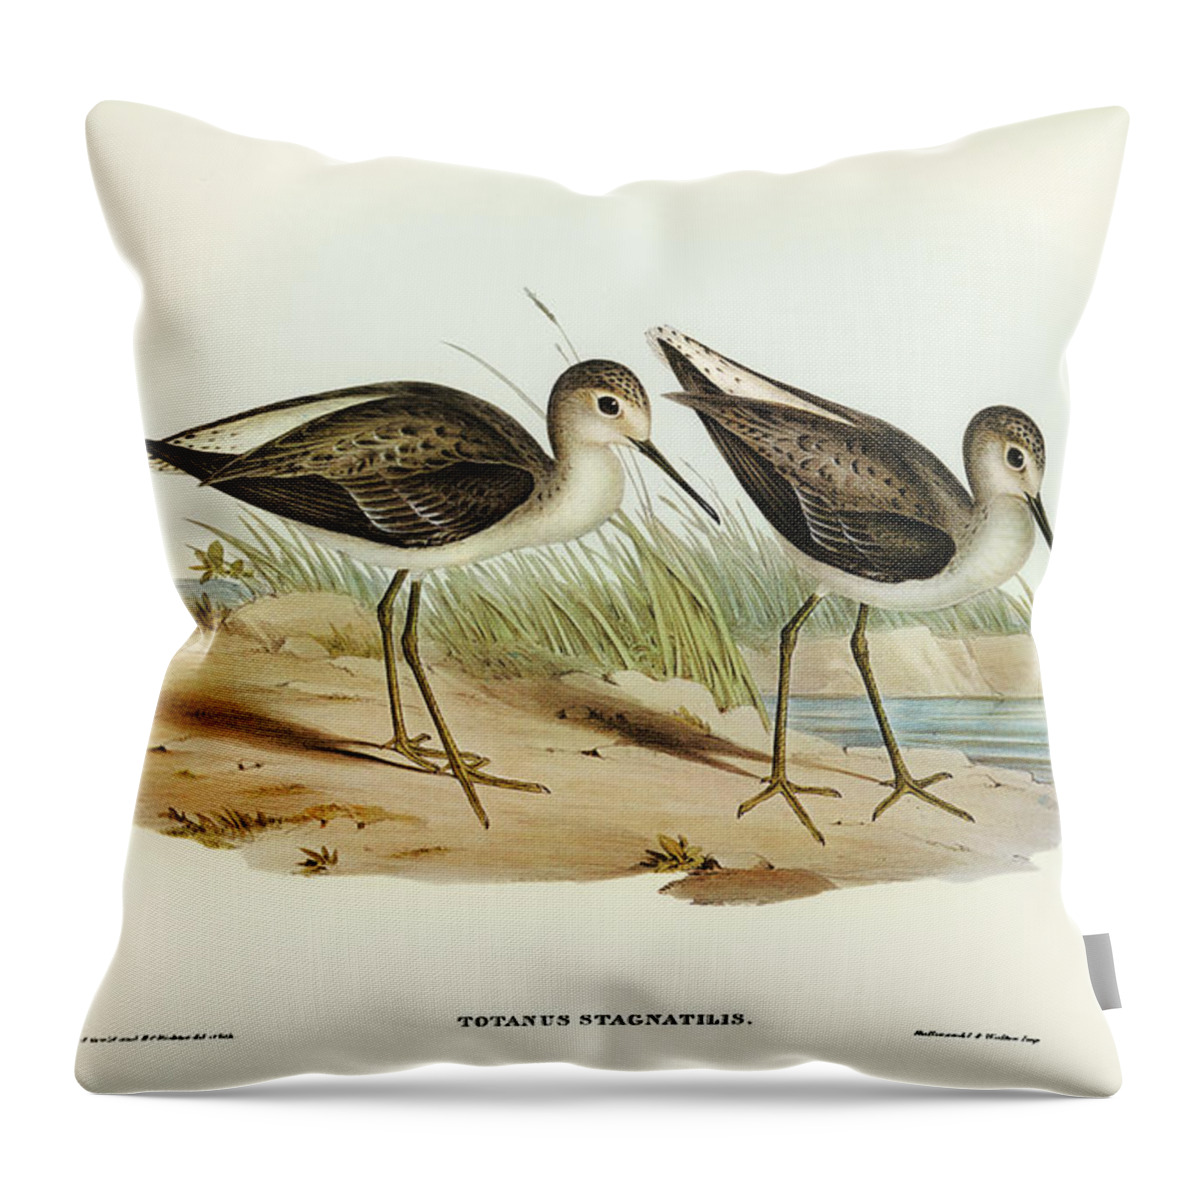 Marsh Sandpiper Throw Pillow featuring the drawing Marsh Sandpiper, Totanus stagnatilis by John Gould